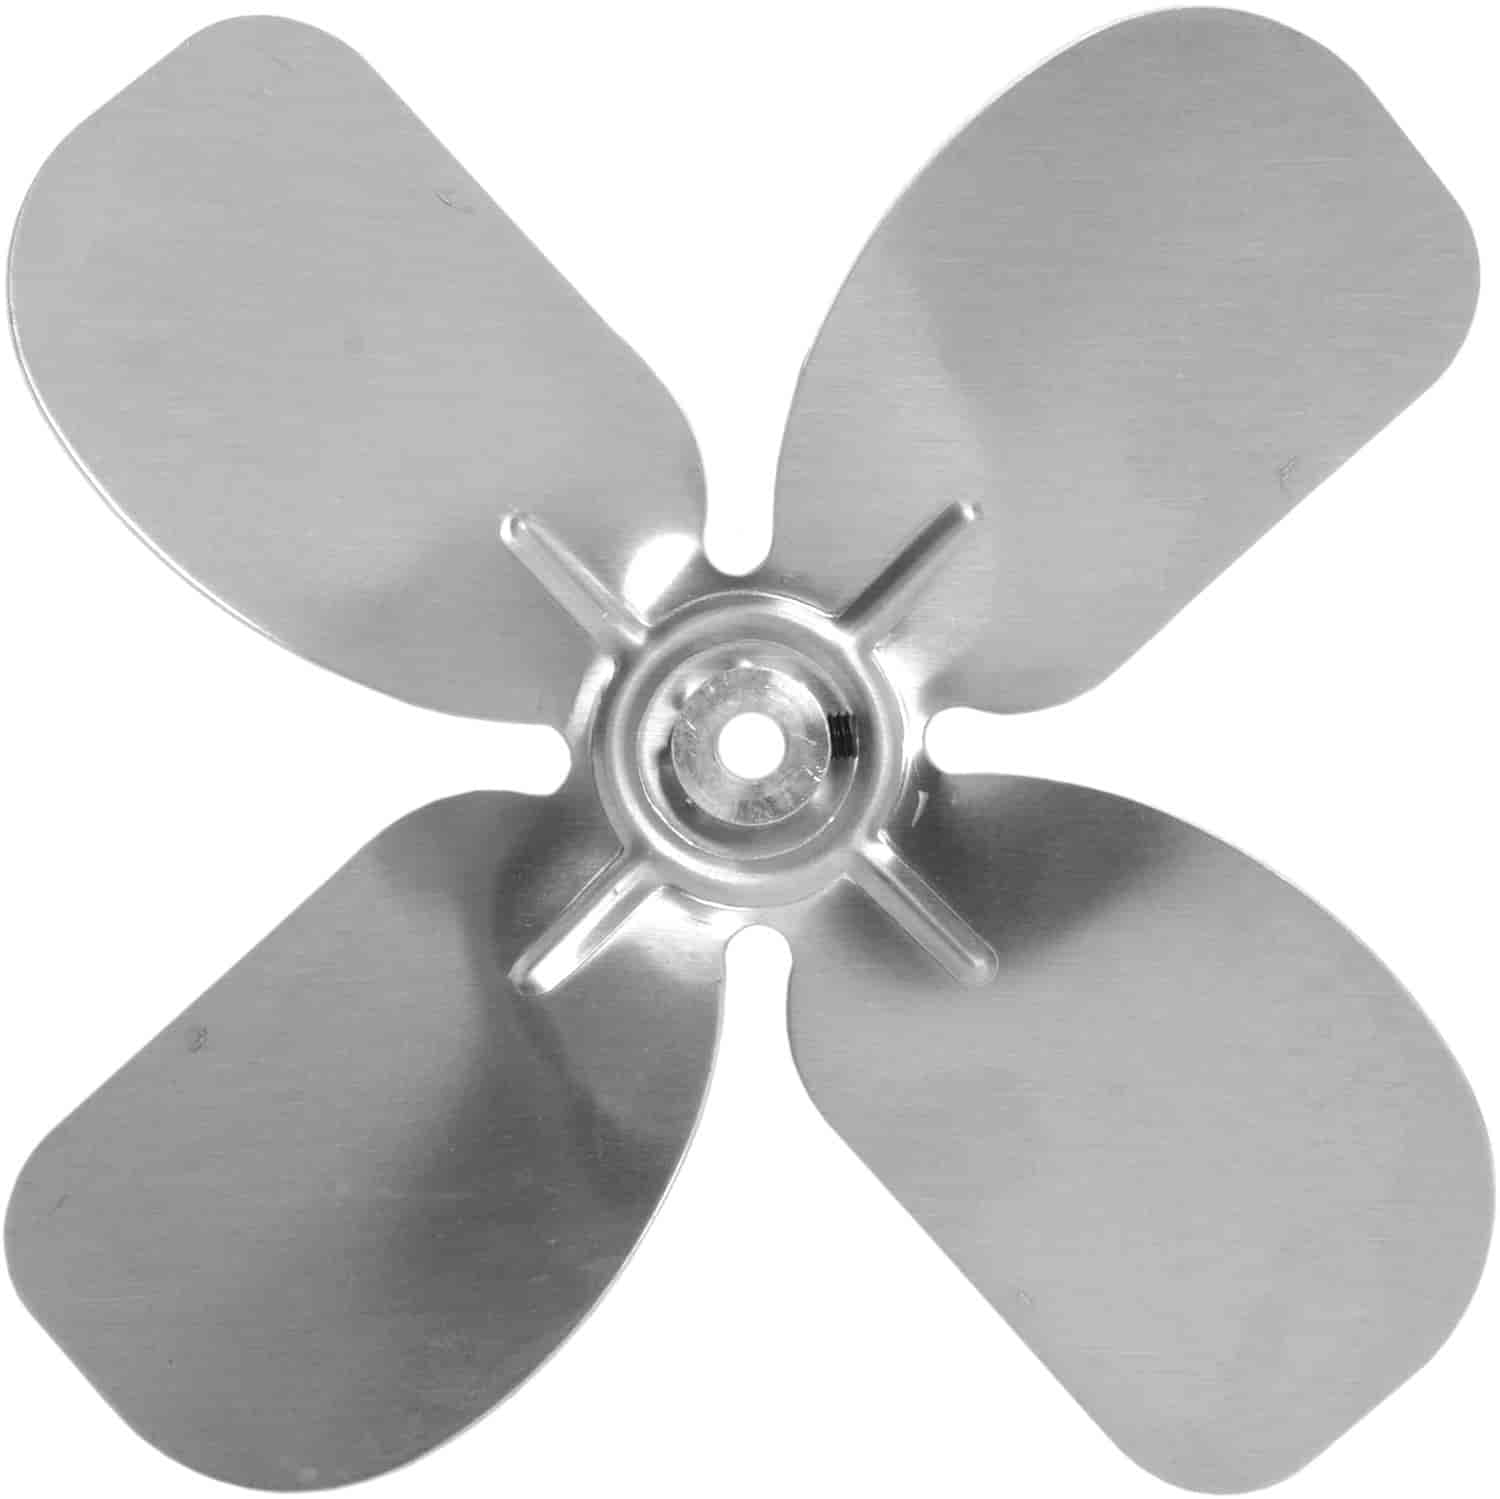 Replacement Fan Blade for 12,000 BTU Heater